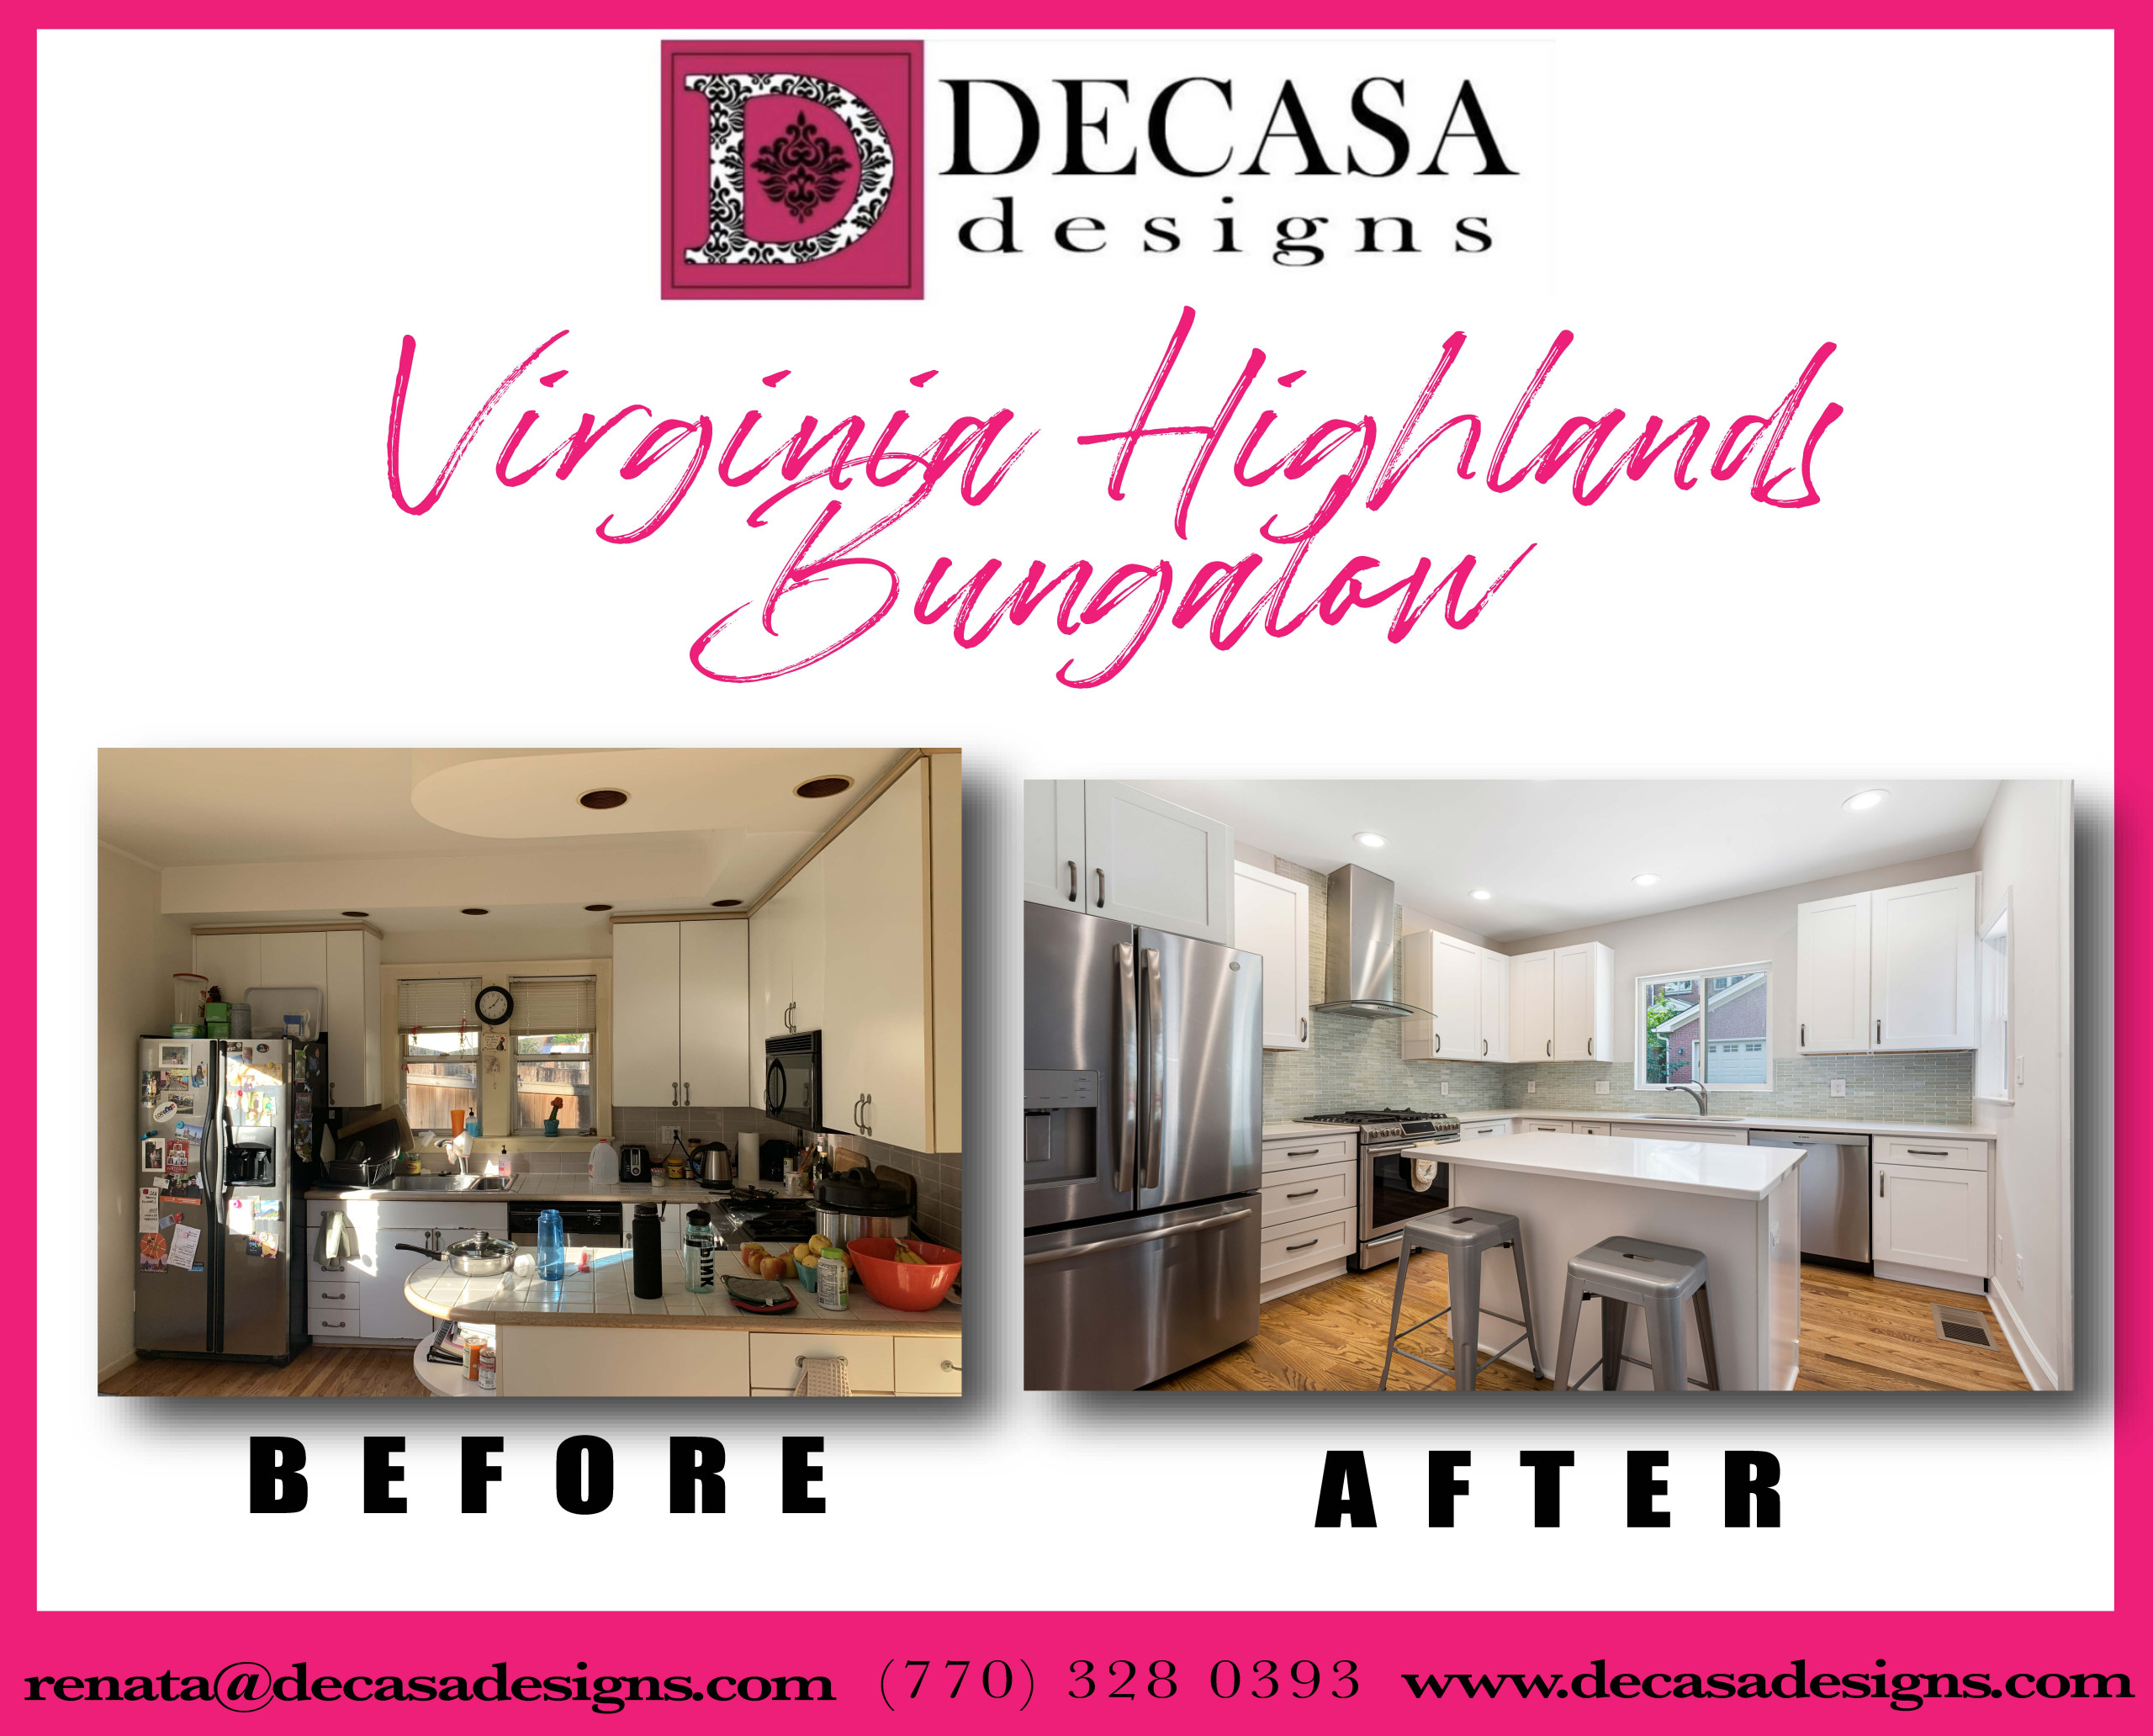 VA Highland Historic Bungalow full transformation